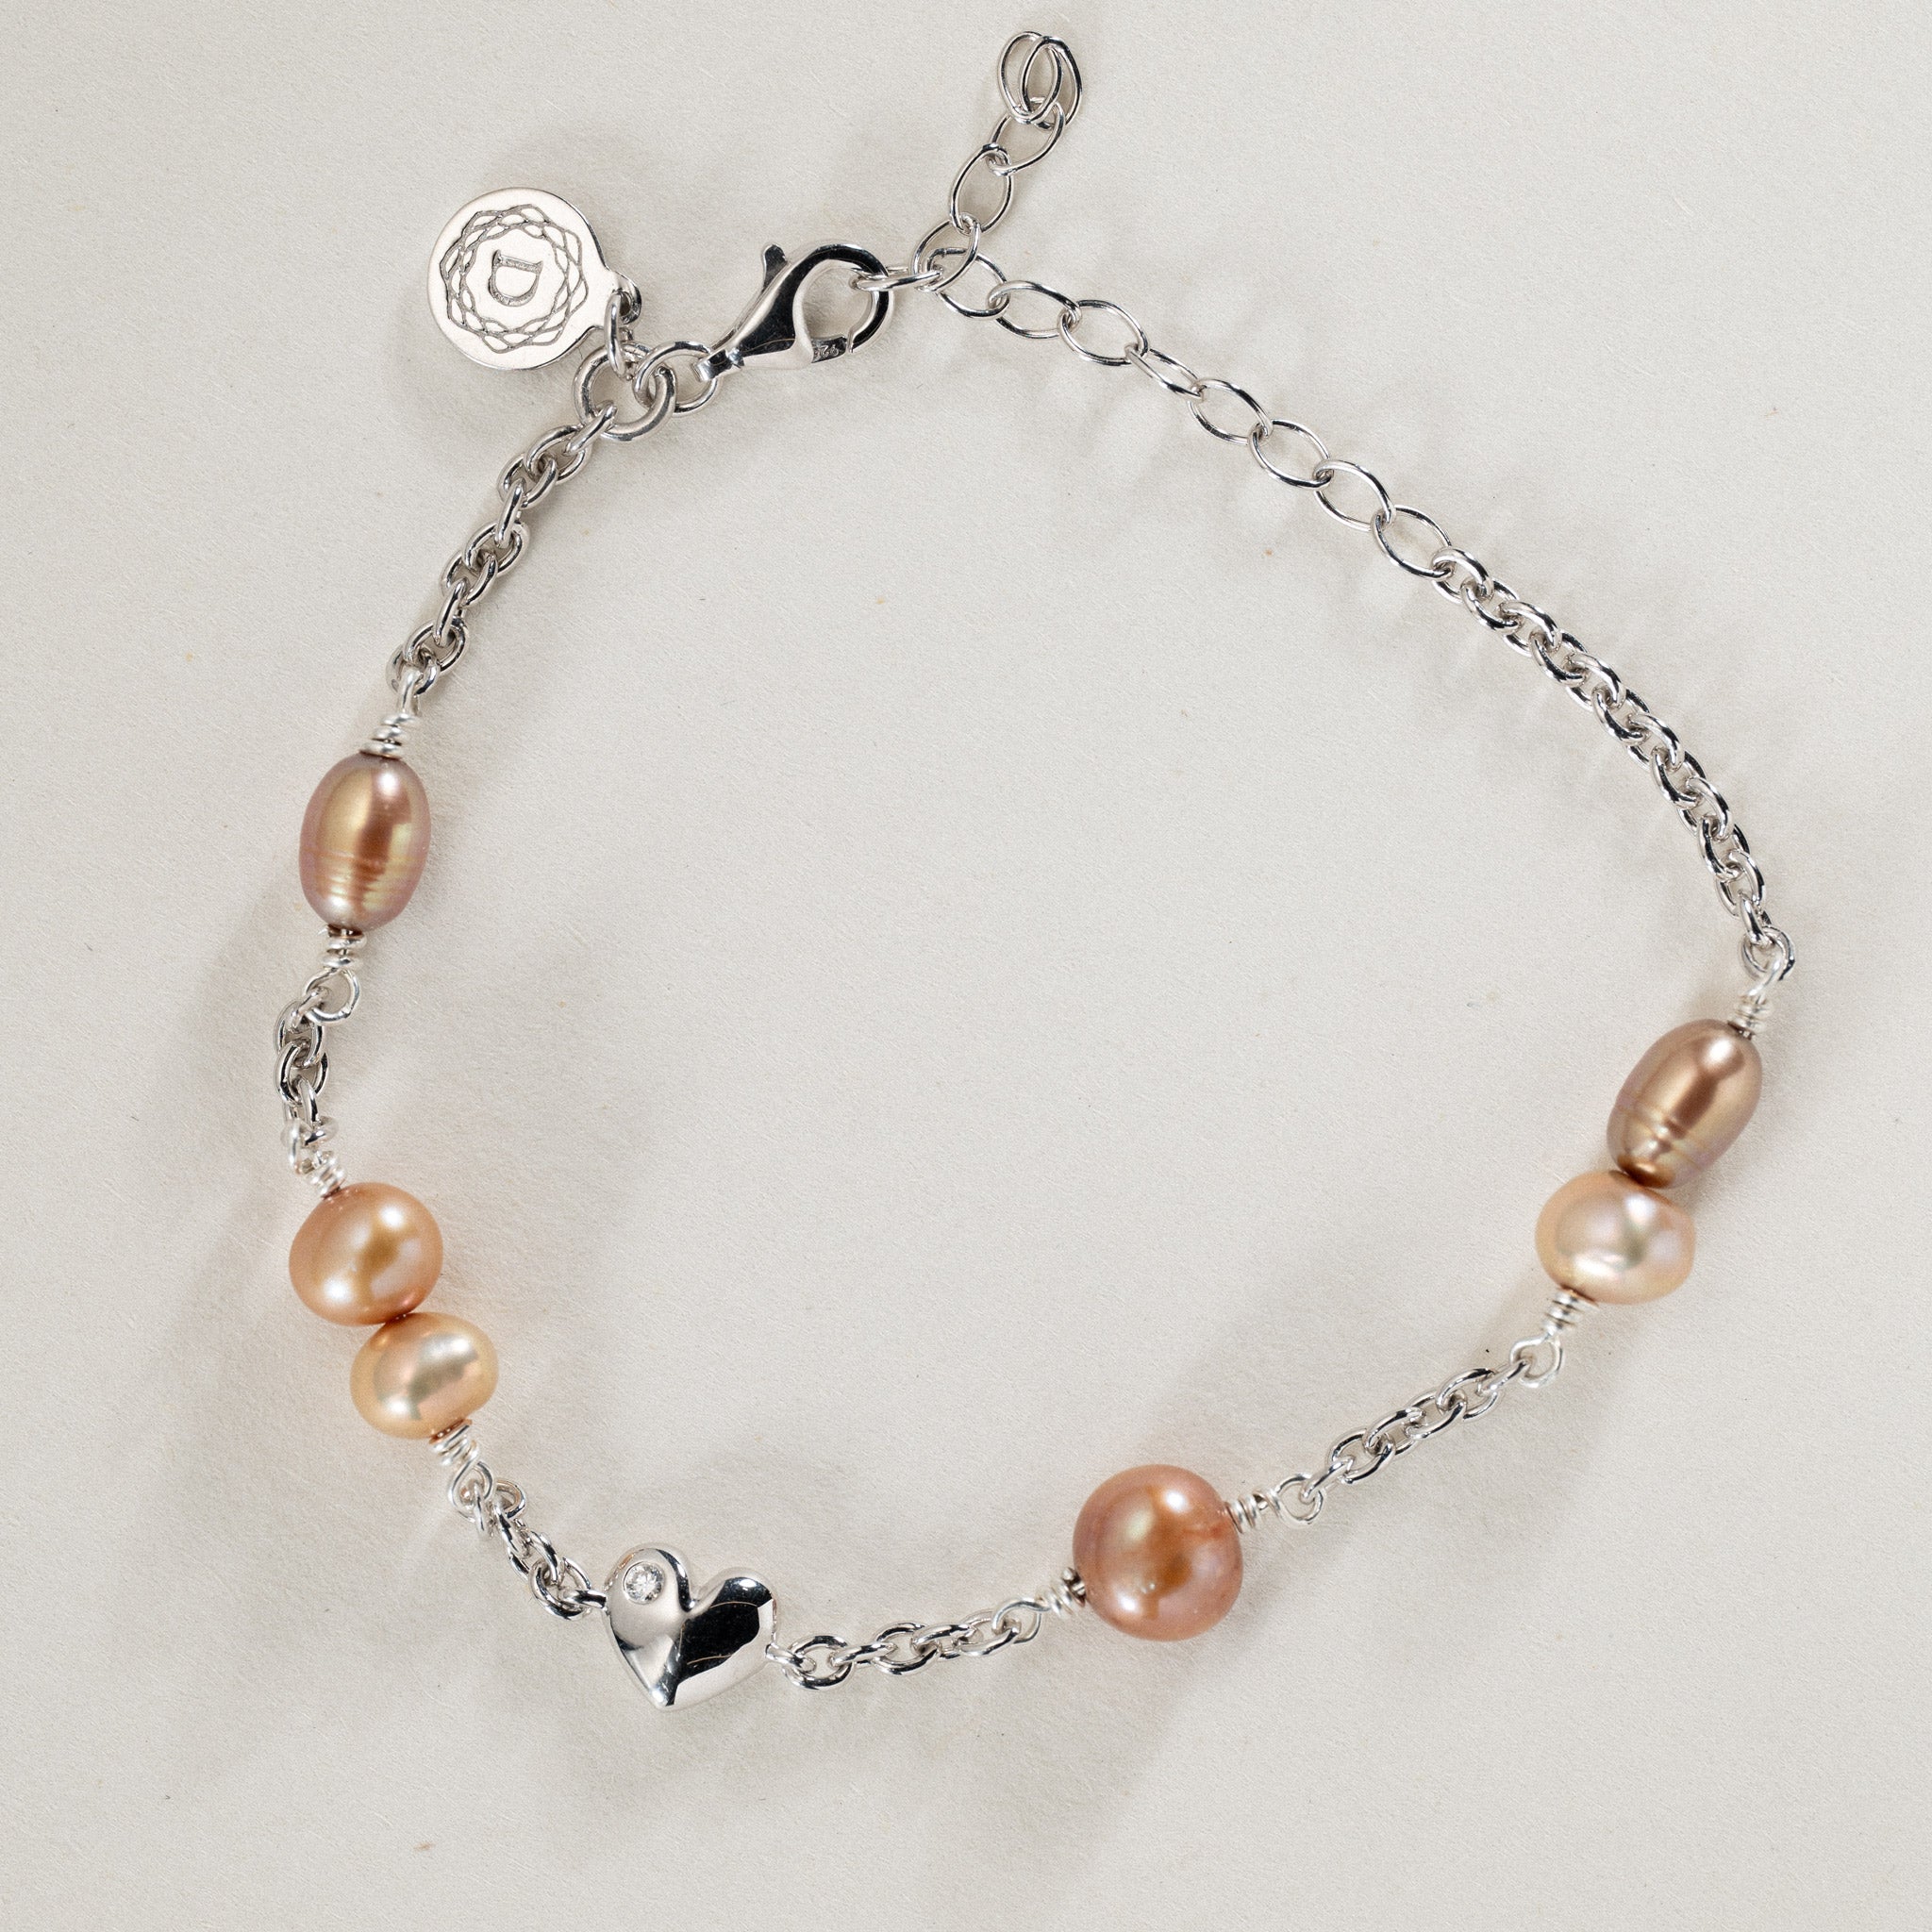 No. 02 - 0.02ct Grown Diamond Twised heart bracelet in silver w. freshwater pearls